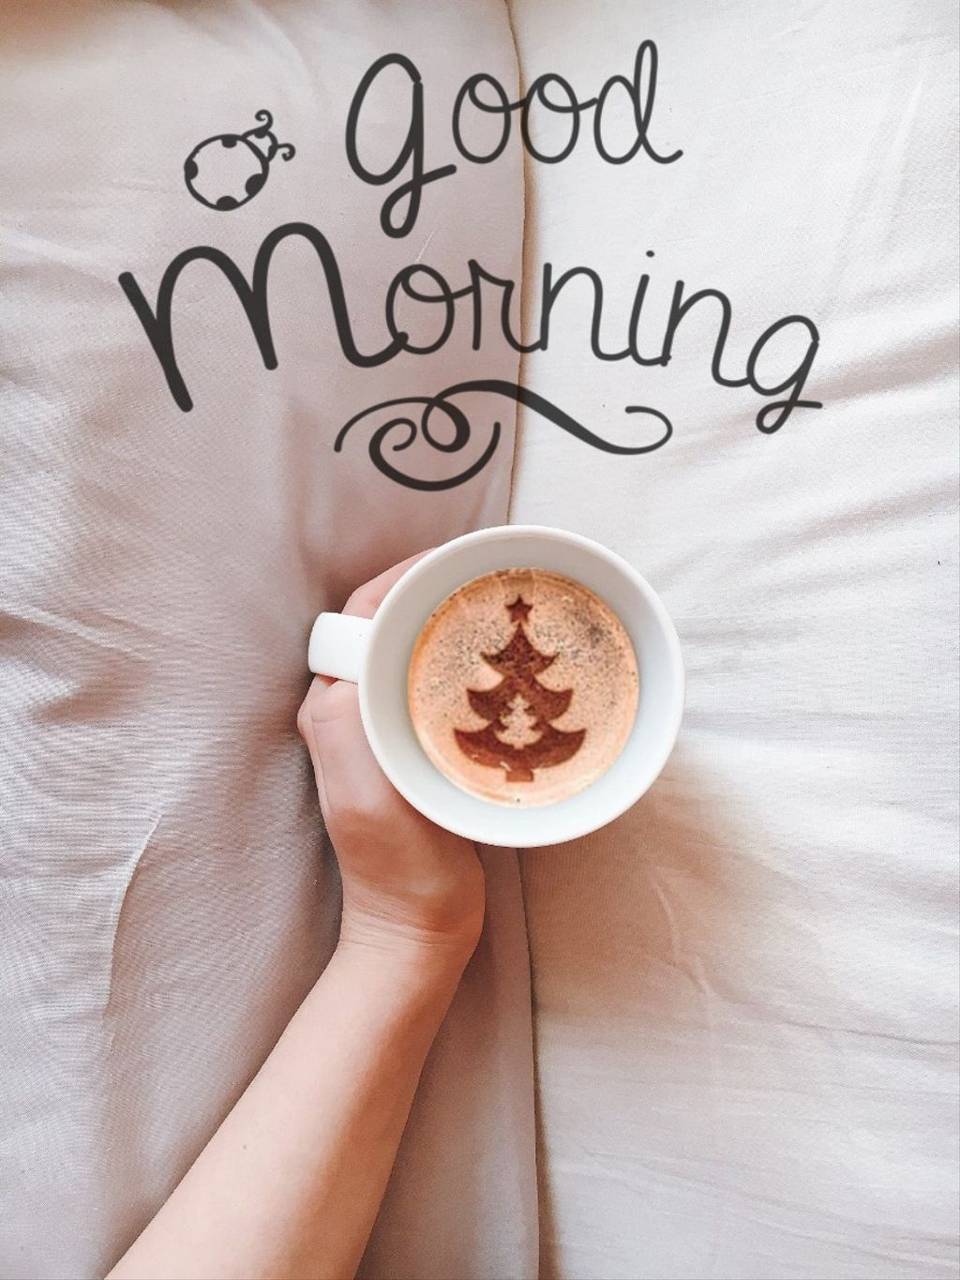 Good morning coffee wallpaper